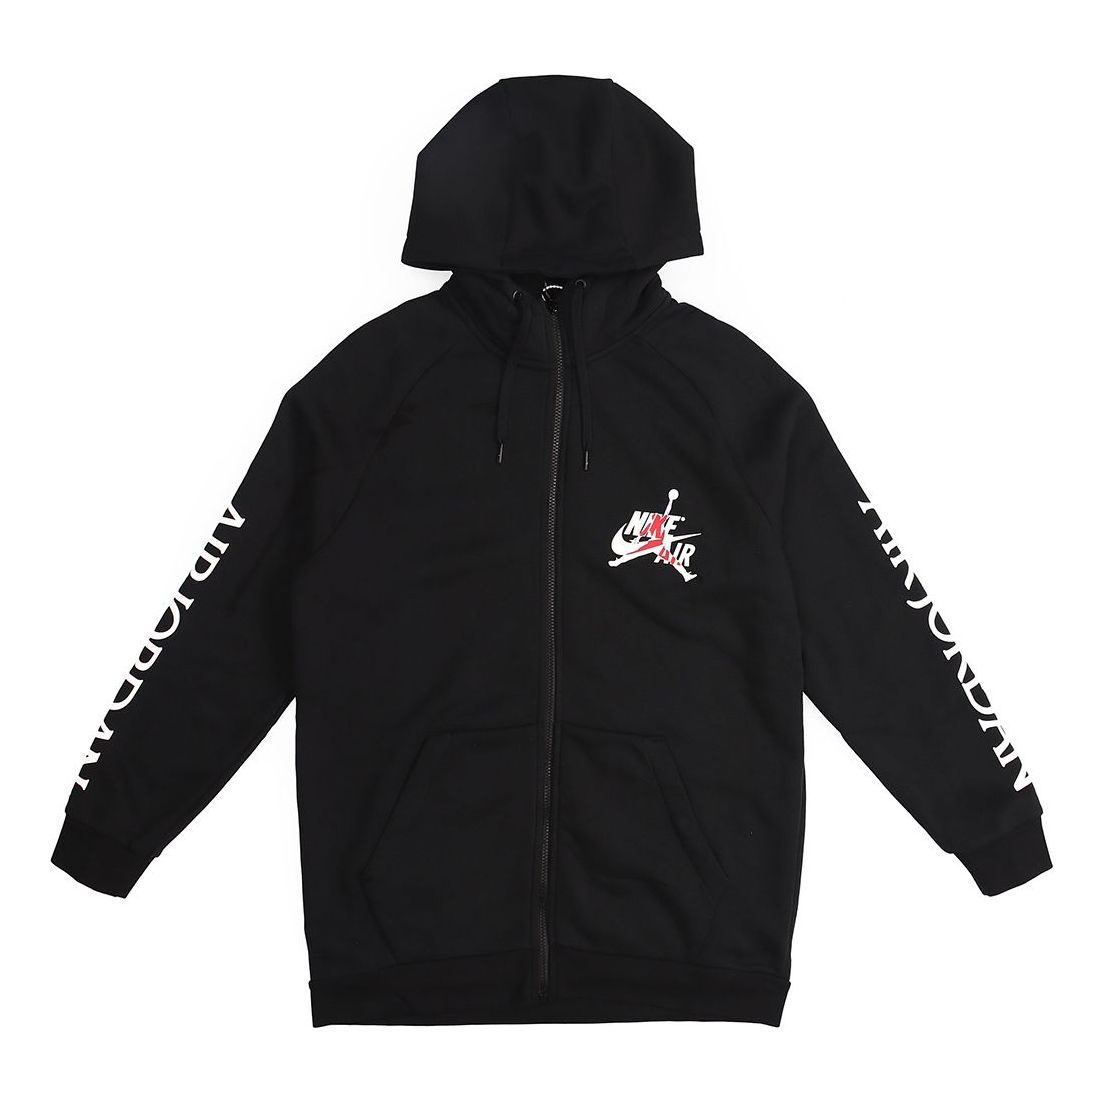 Air Jordan Air hooded Basketball Sports Fleece Lined Jacket Black CK2224-010 - 1